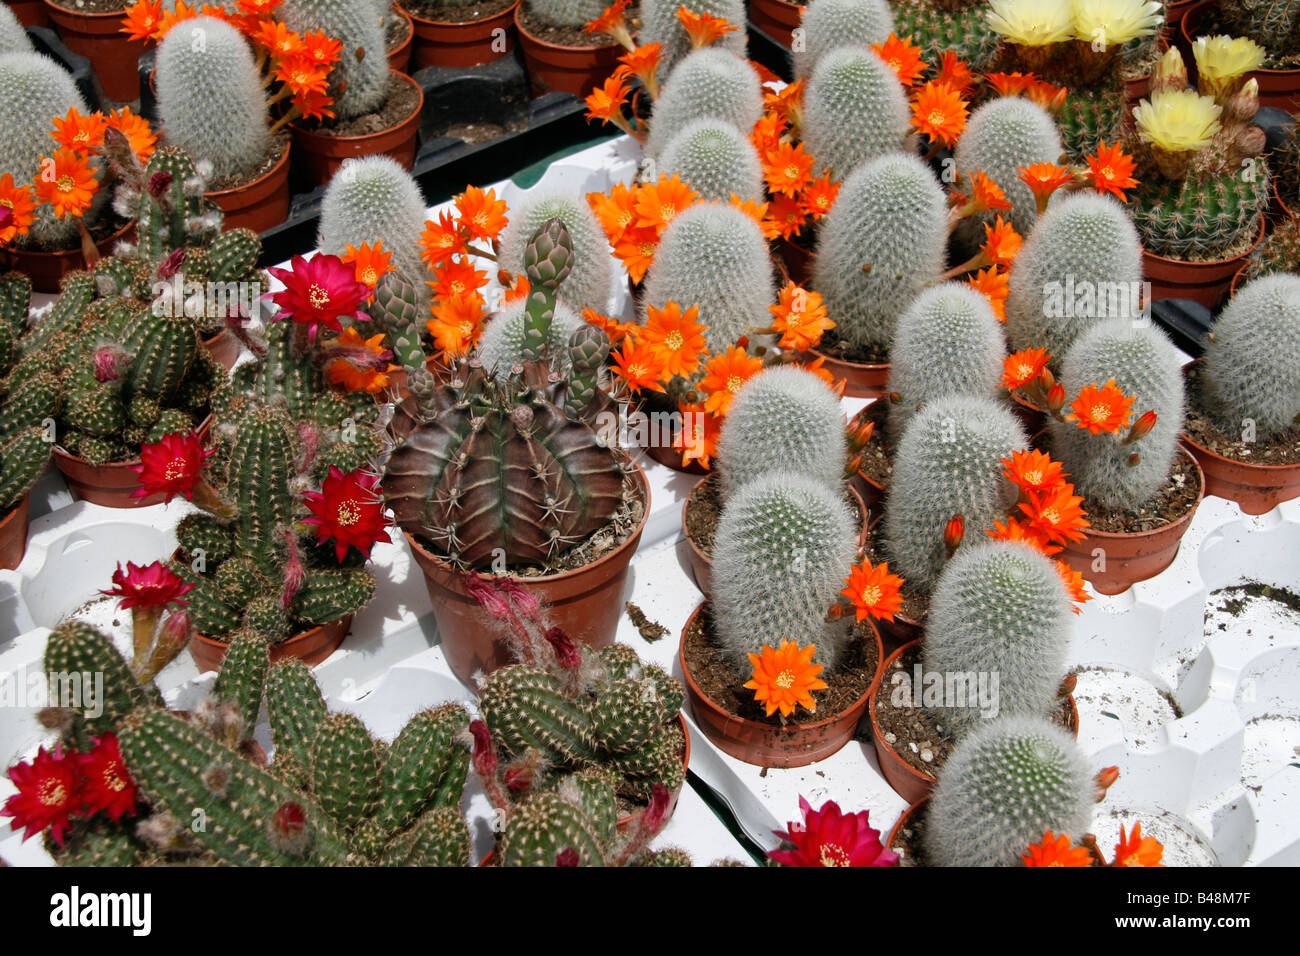 rebutia cactus with orange flowers in garden centre Stock Photo